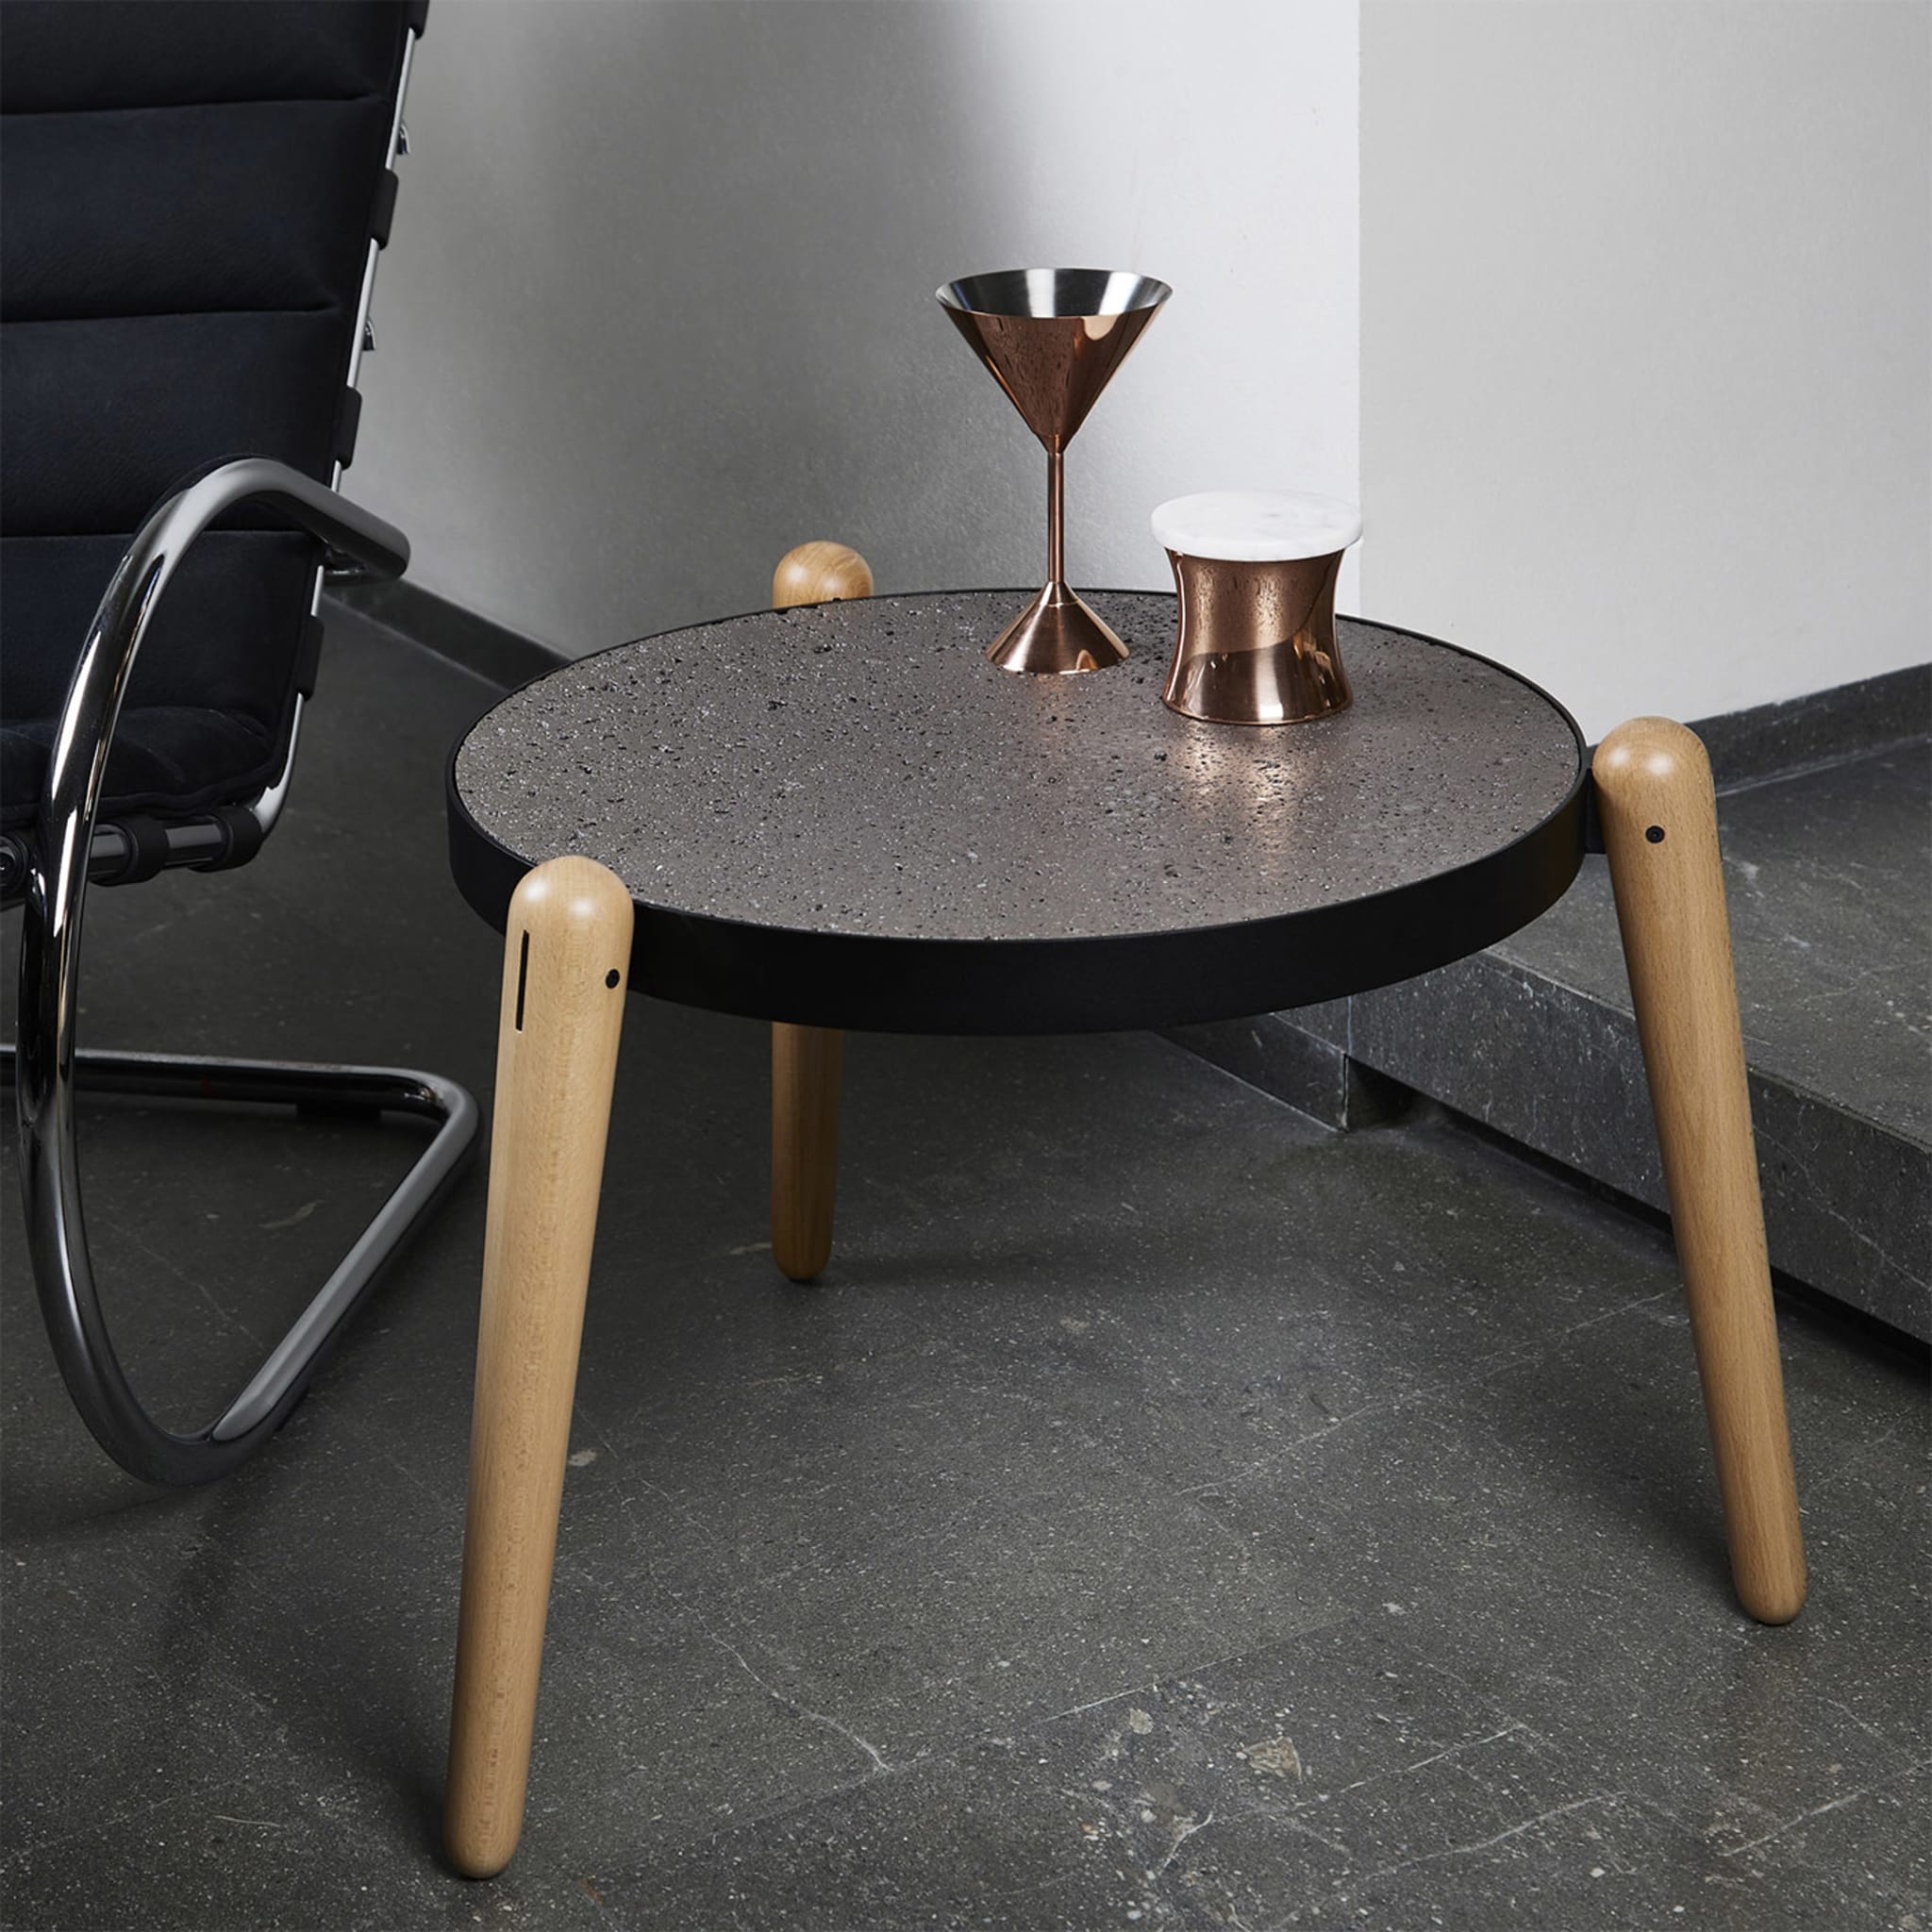 Tris Perciata Stone Round Coffee Table #4 by Luca Maci - Alternative view 1